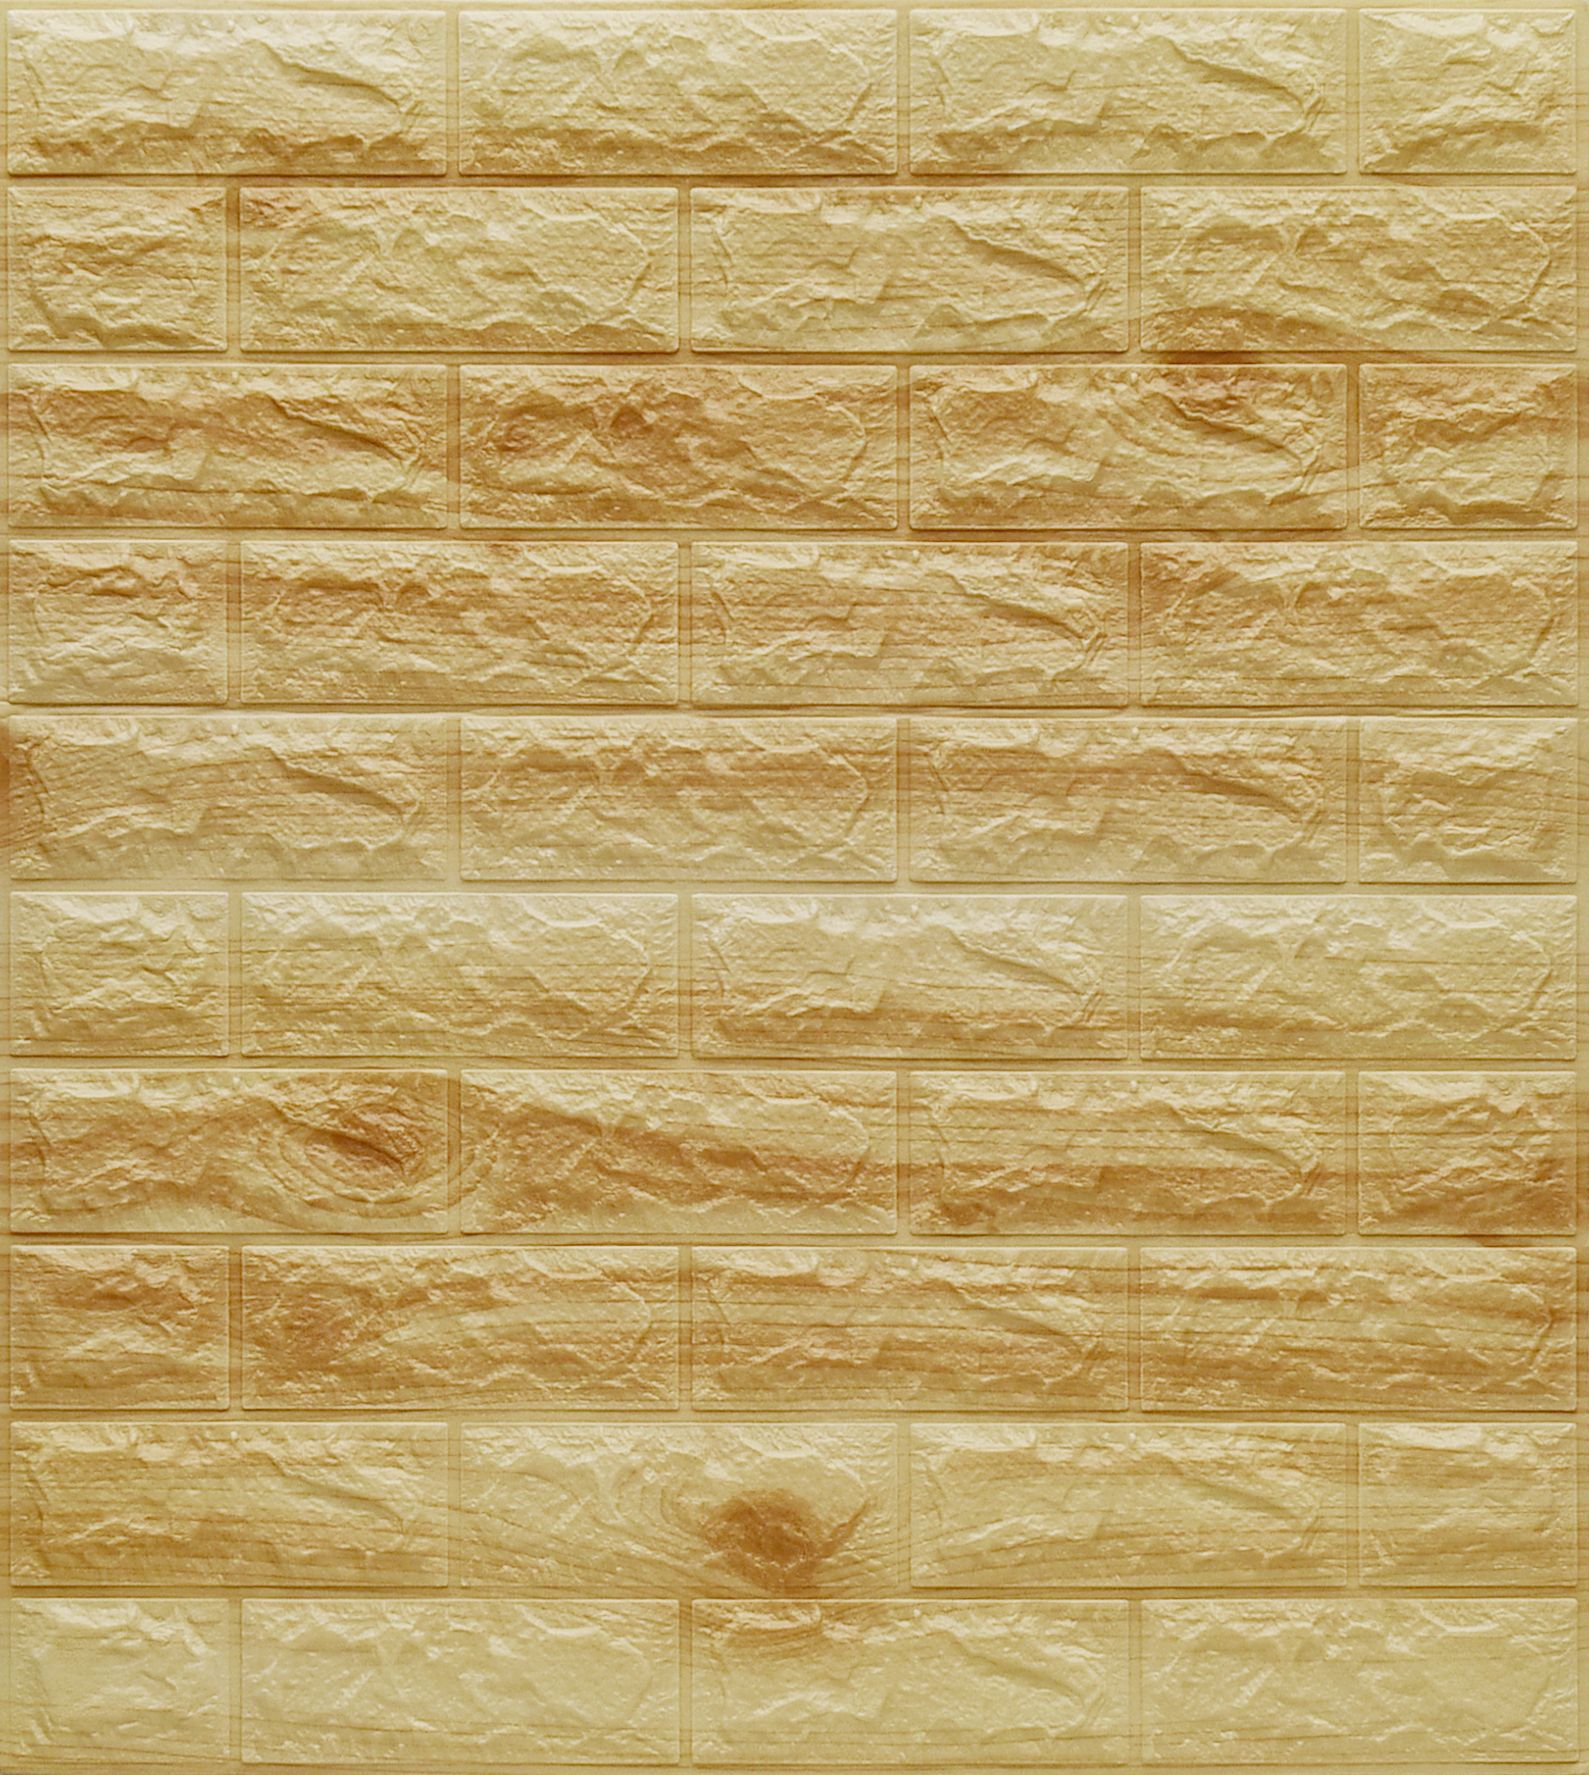 70 * 77cm Large Size 3d 3d Brick Pattern Wall Sticker Wallpaper Xpe Foam Self-Adhesive Diy Wallpaper